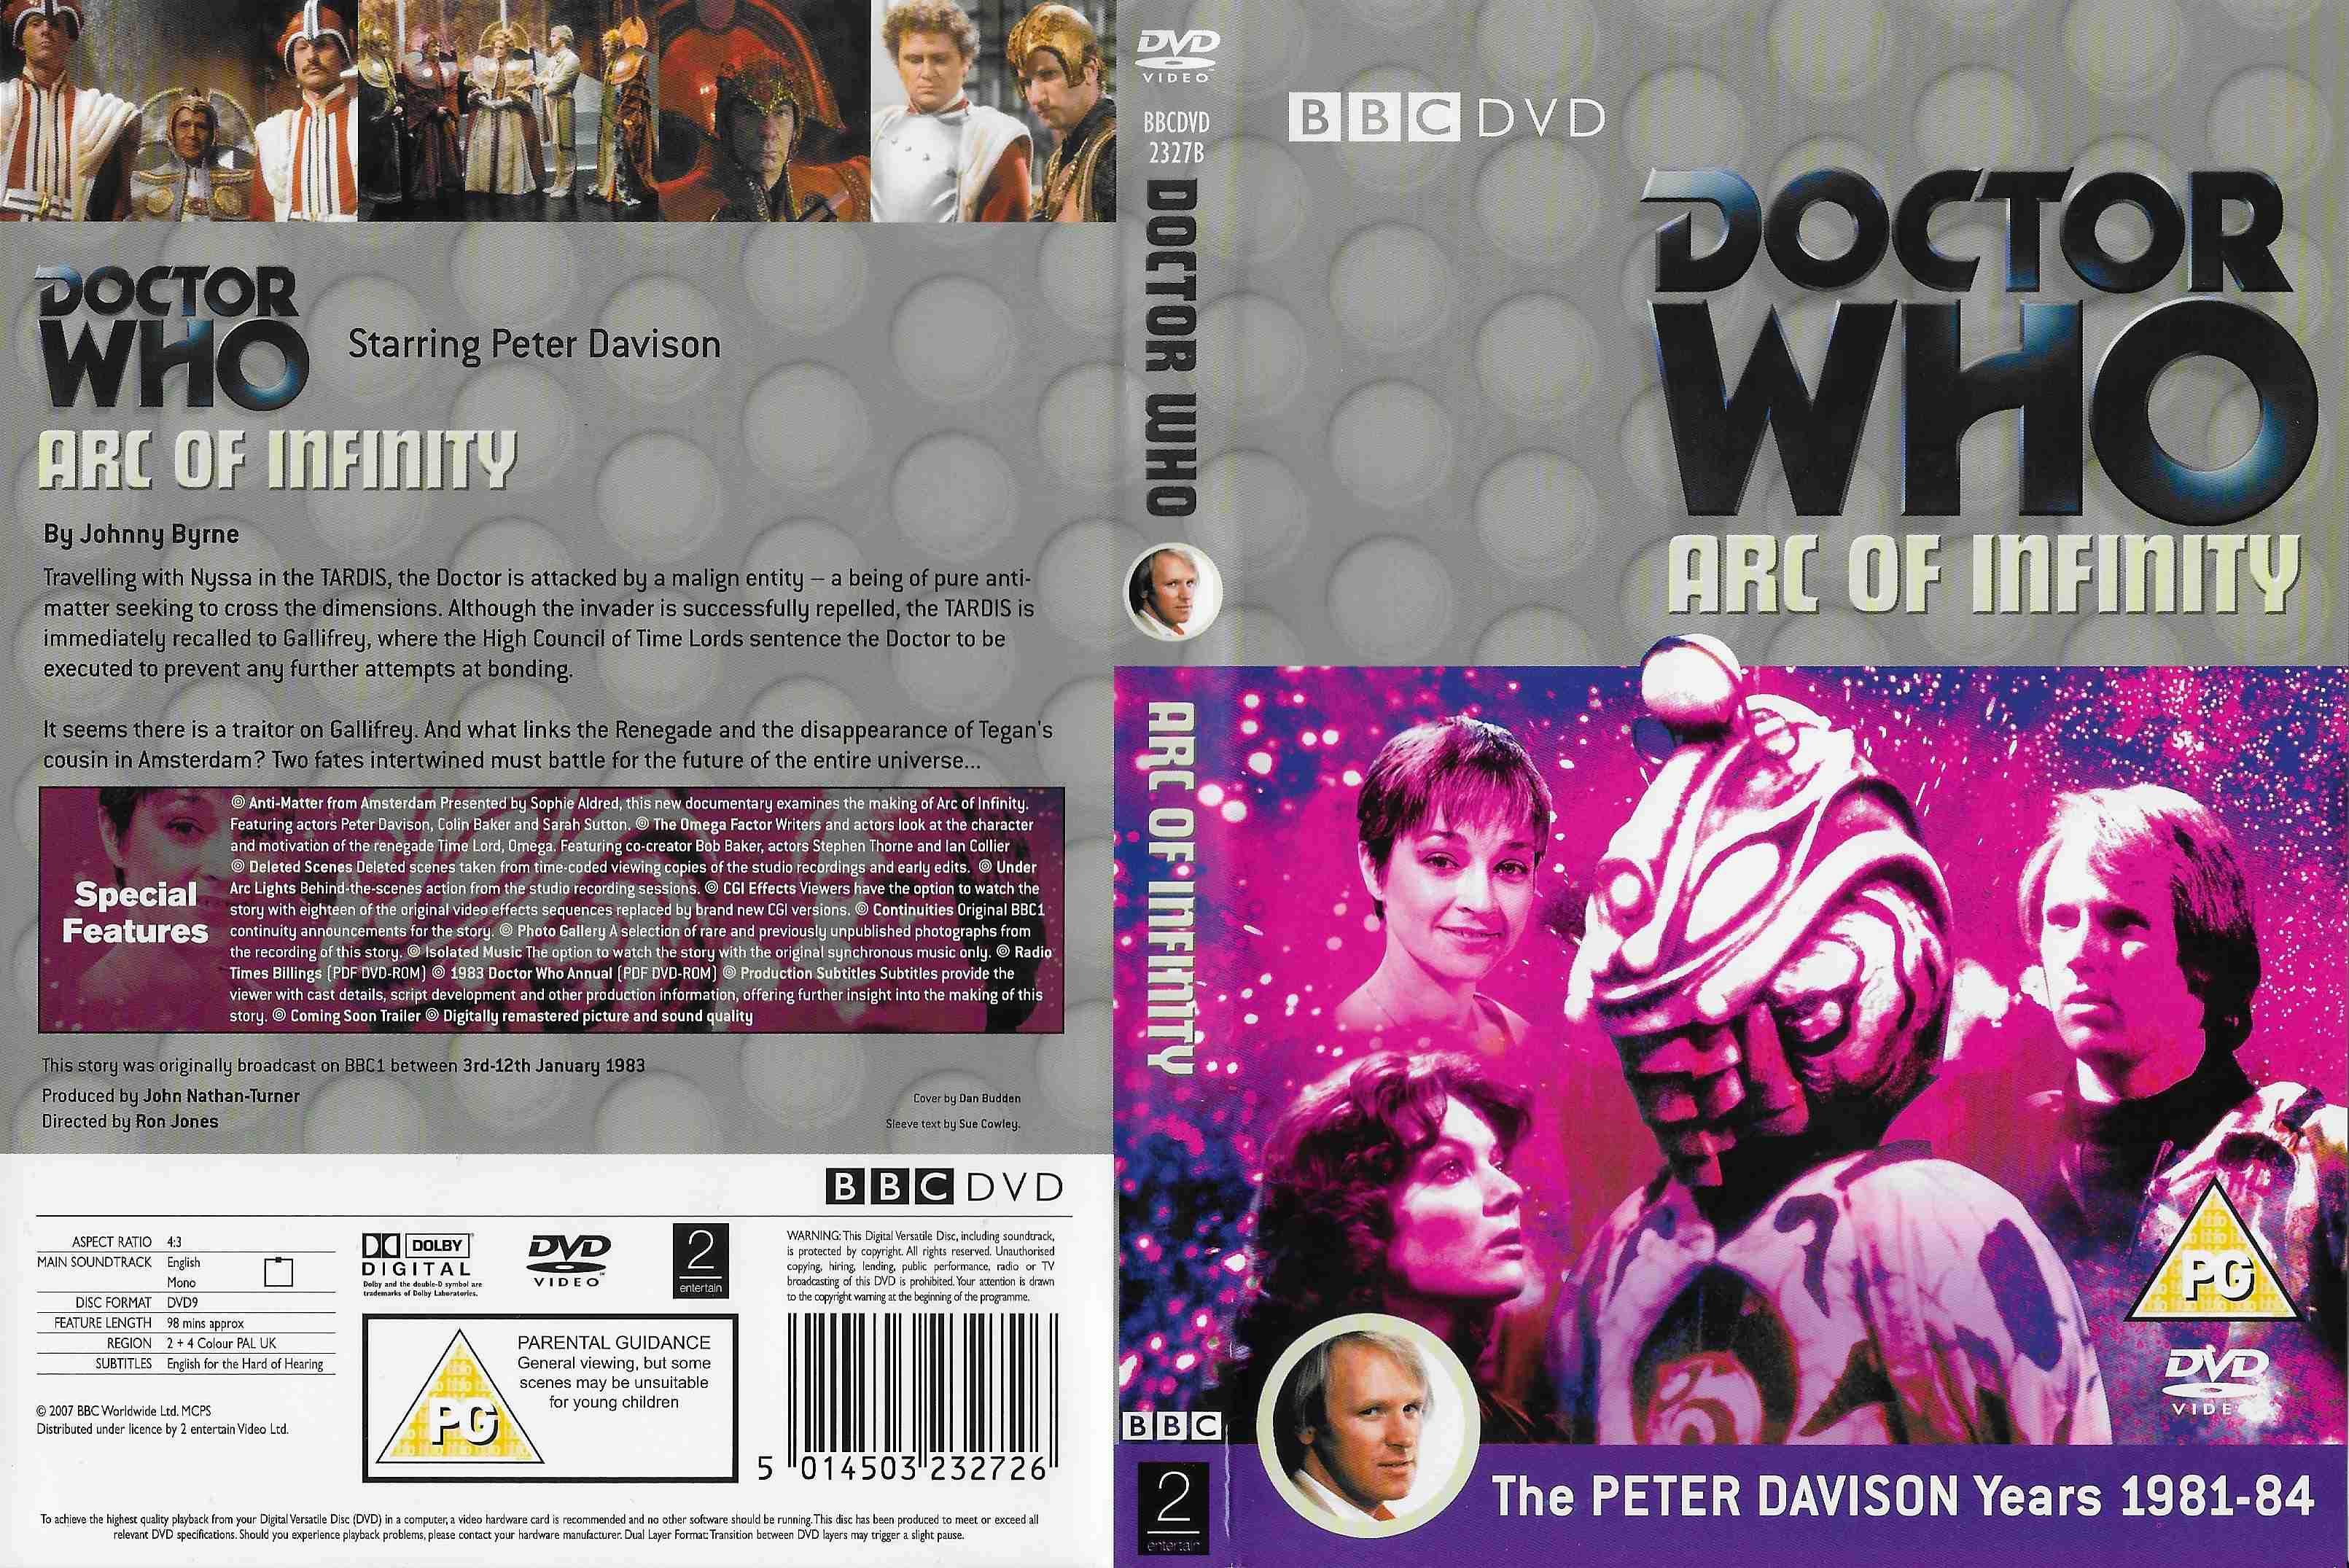 Back cover of BBCDVD 2327B